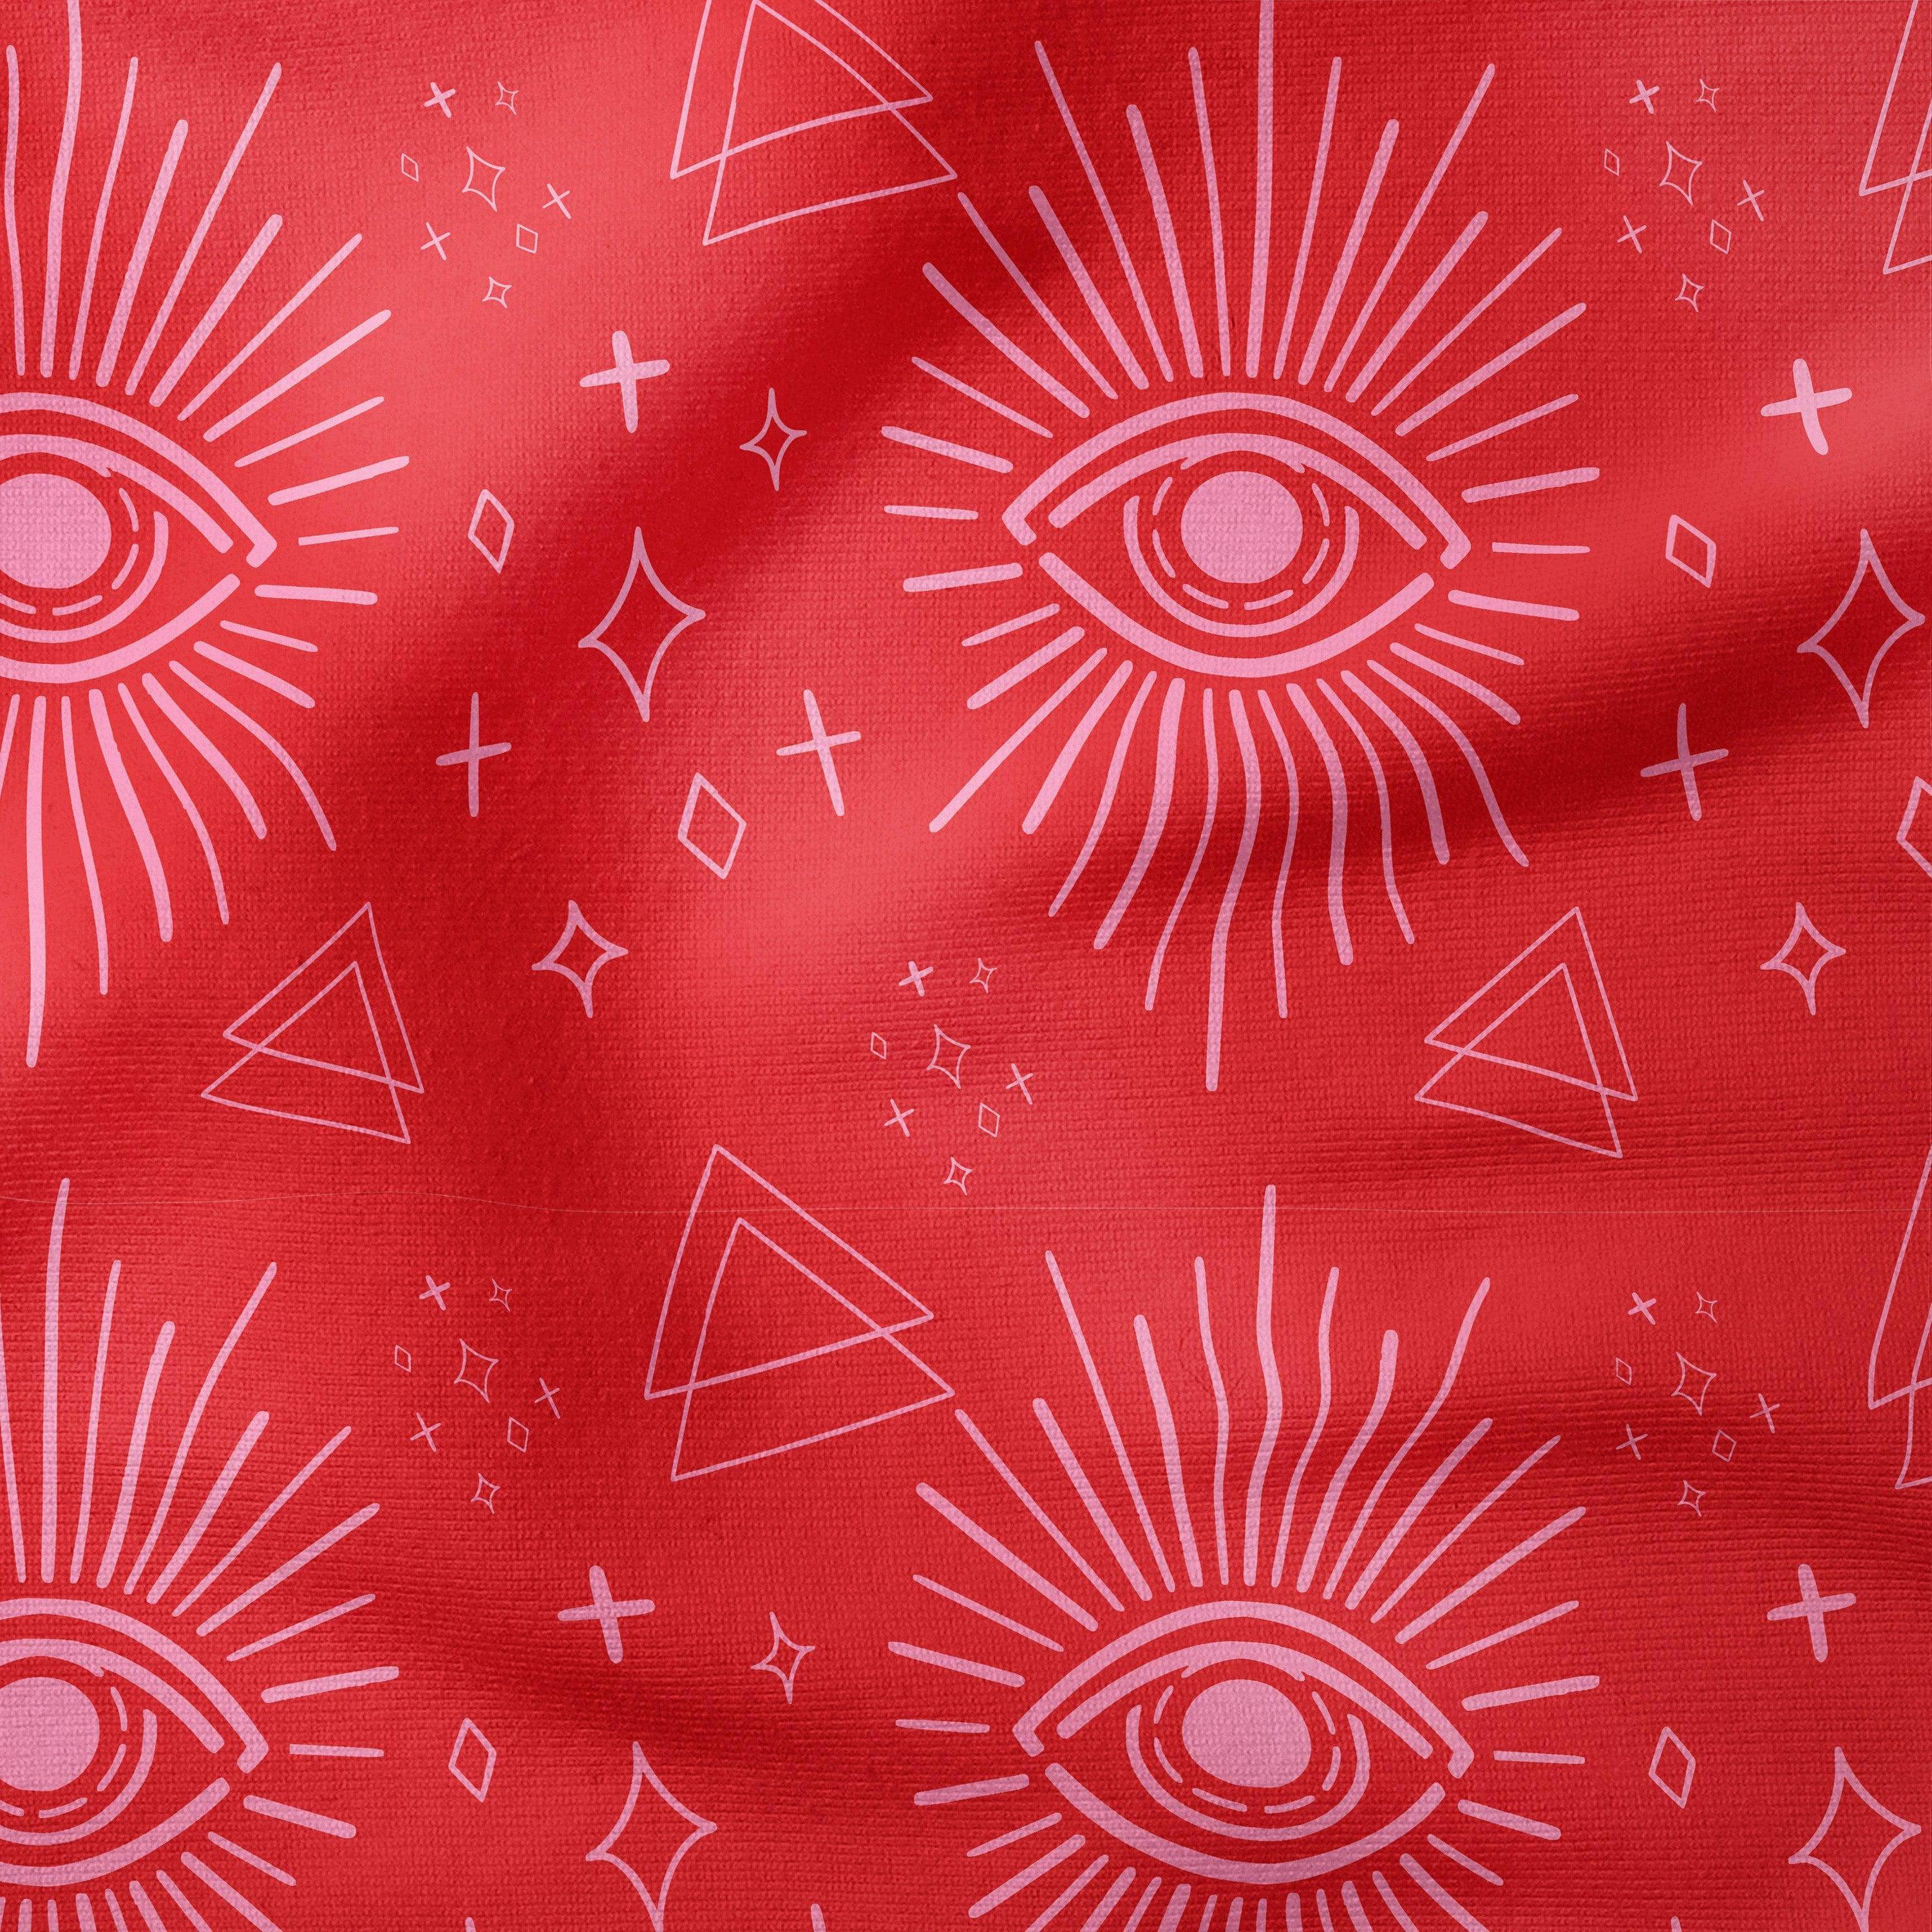 Mystic Eyes-Art Print Fabric-Melco Fabrics-Pink on Red-Cotton Poplin (110gsm)-Melco Fabrics-Online-Fabric-Shop-Australia